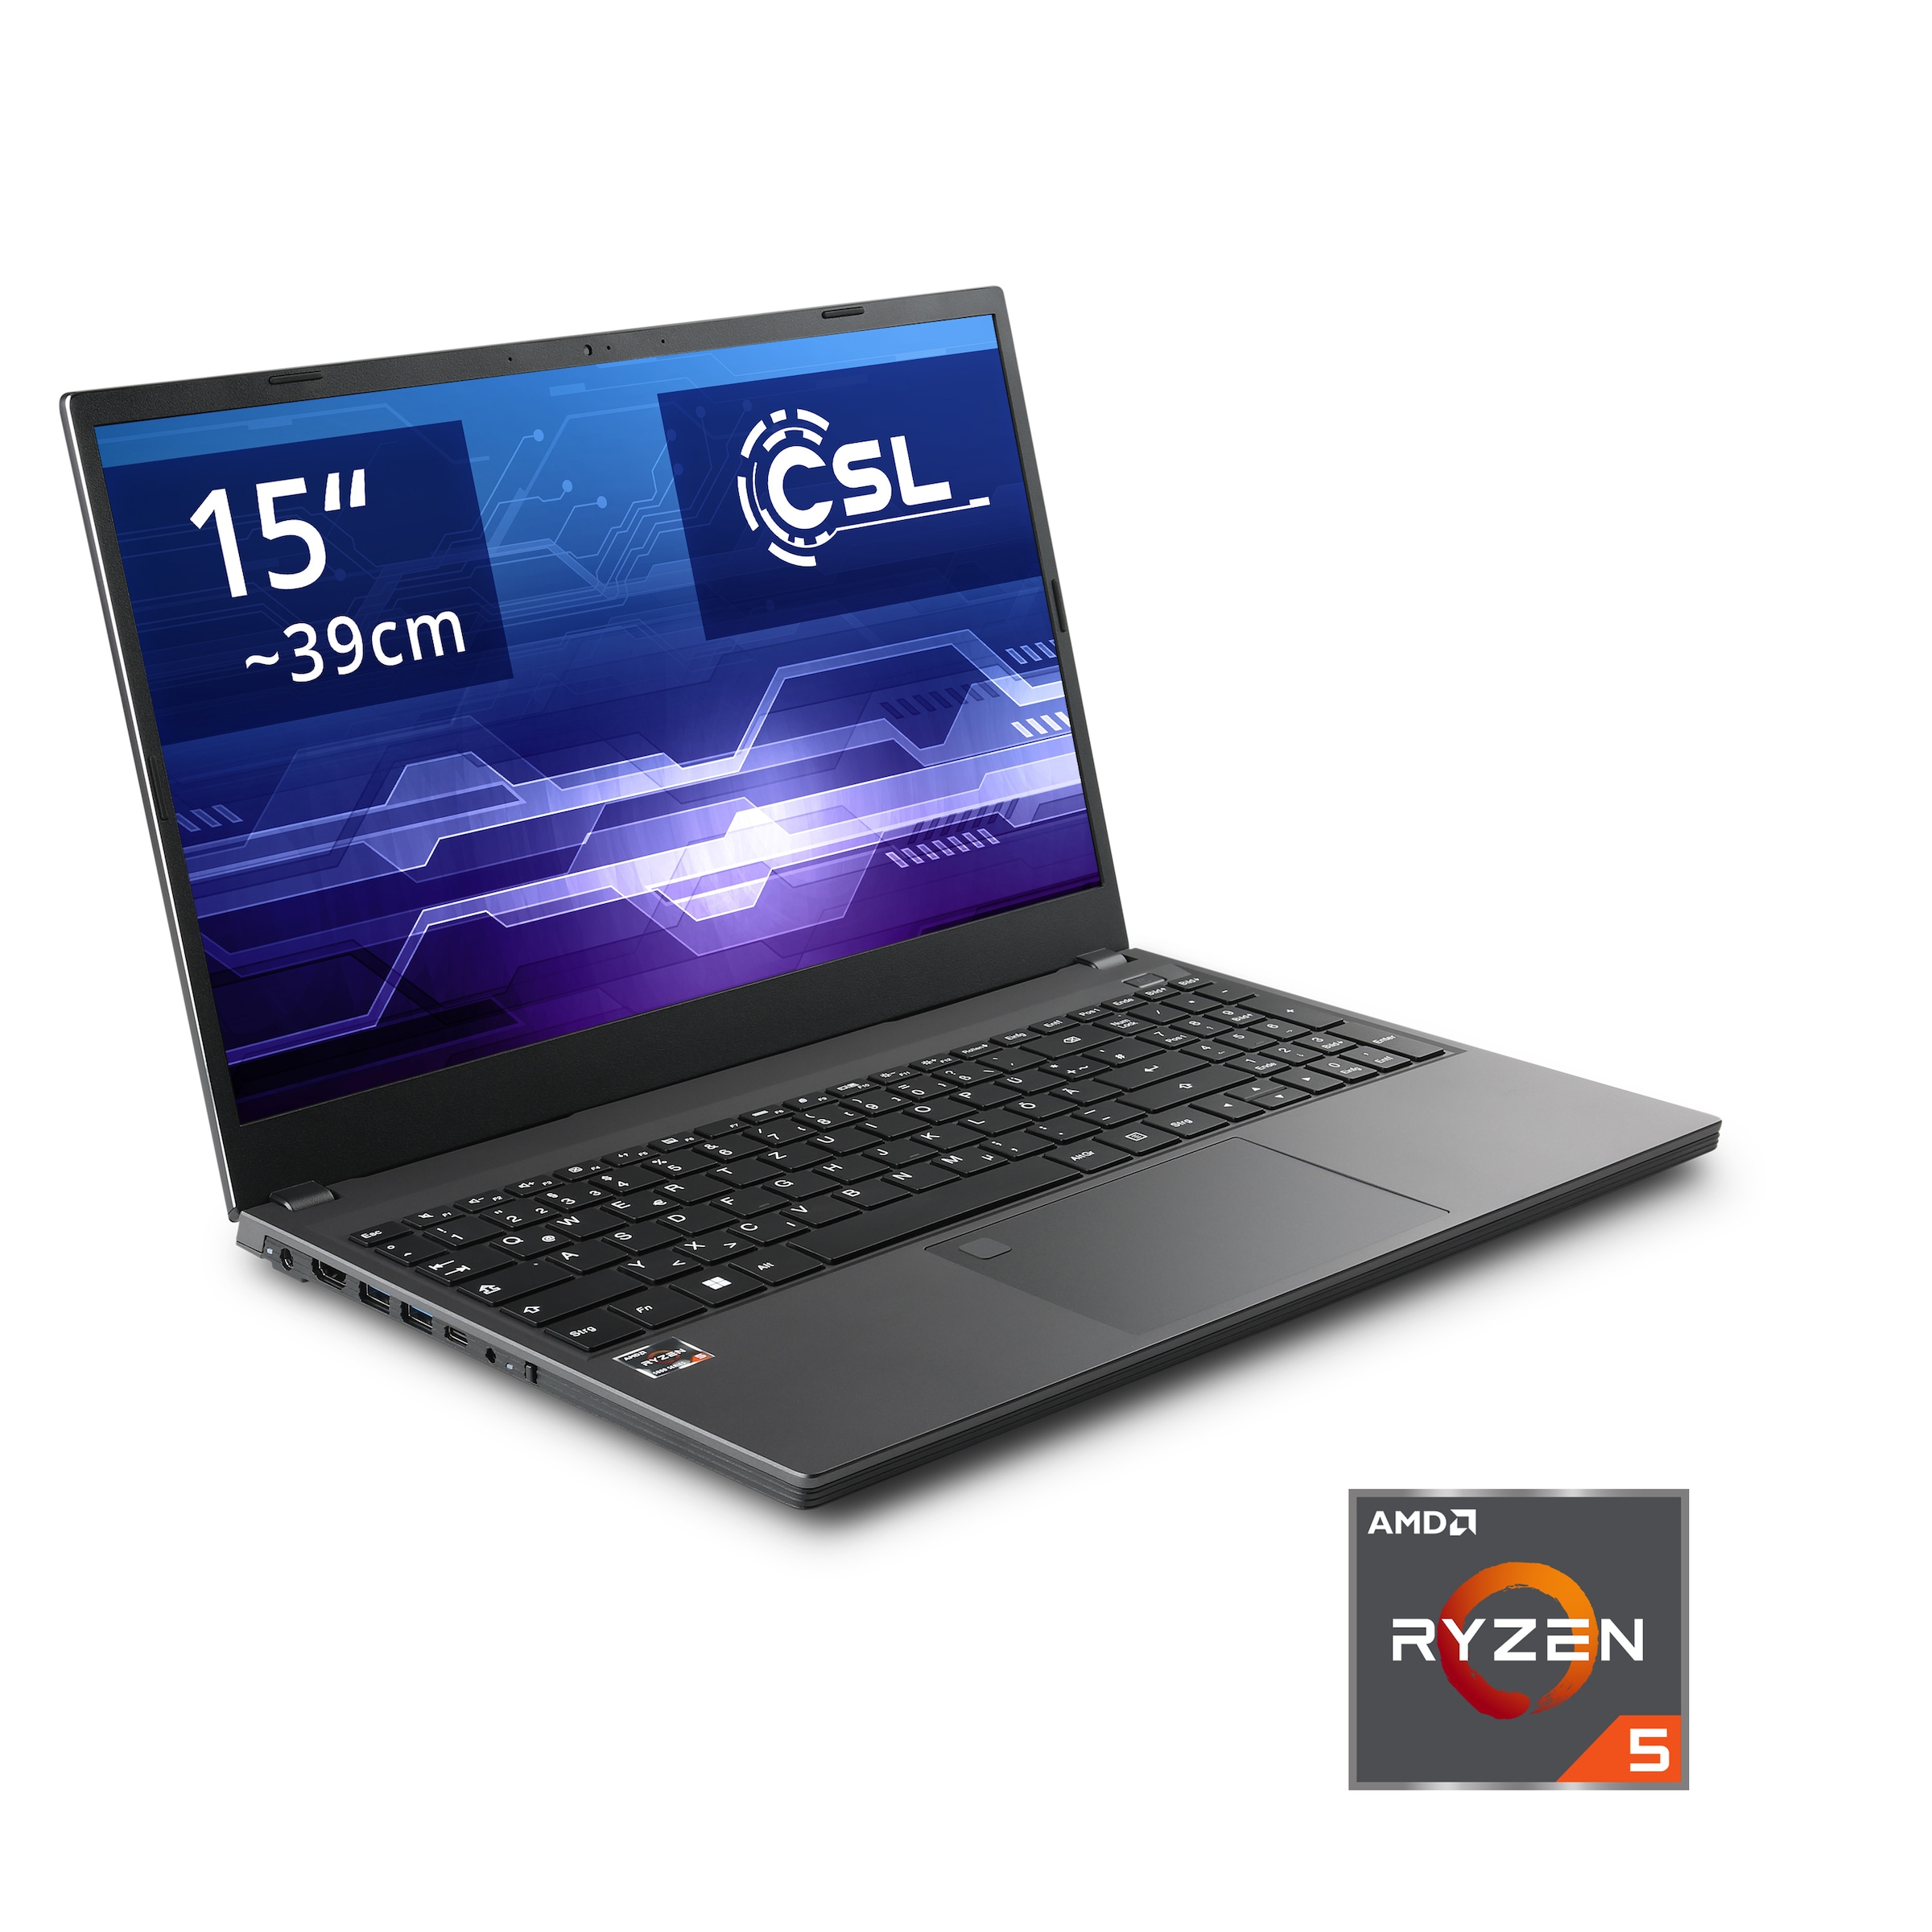 CSL Notebook »R'Evolve C15 5500U / 32GB / 4000GB / Windows 11 Home«, 39,6 cm, / 15,6 Zoll, 4000 GB SSD